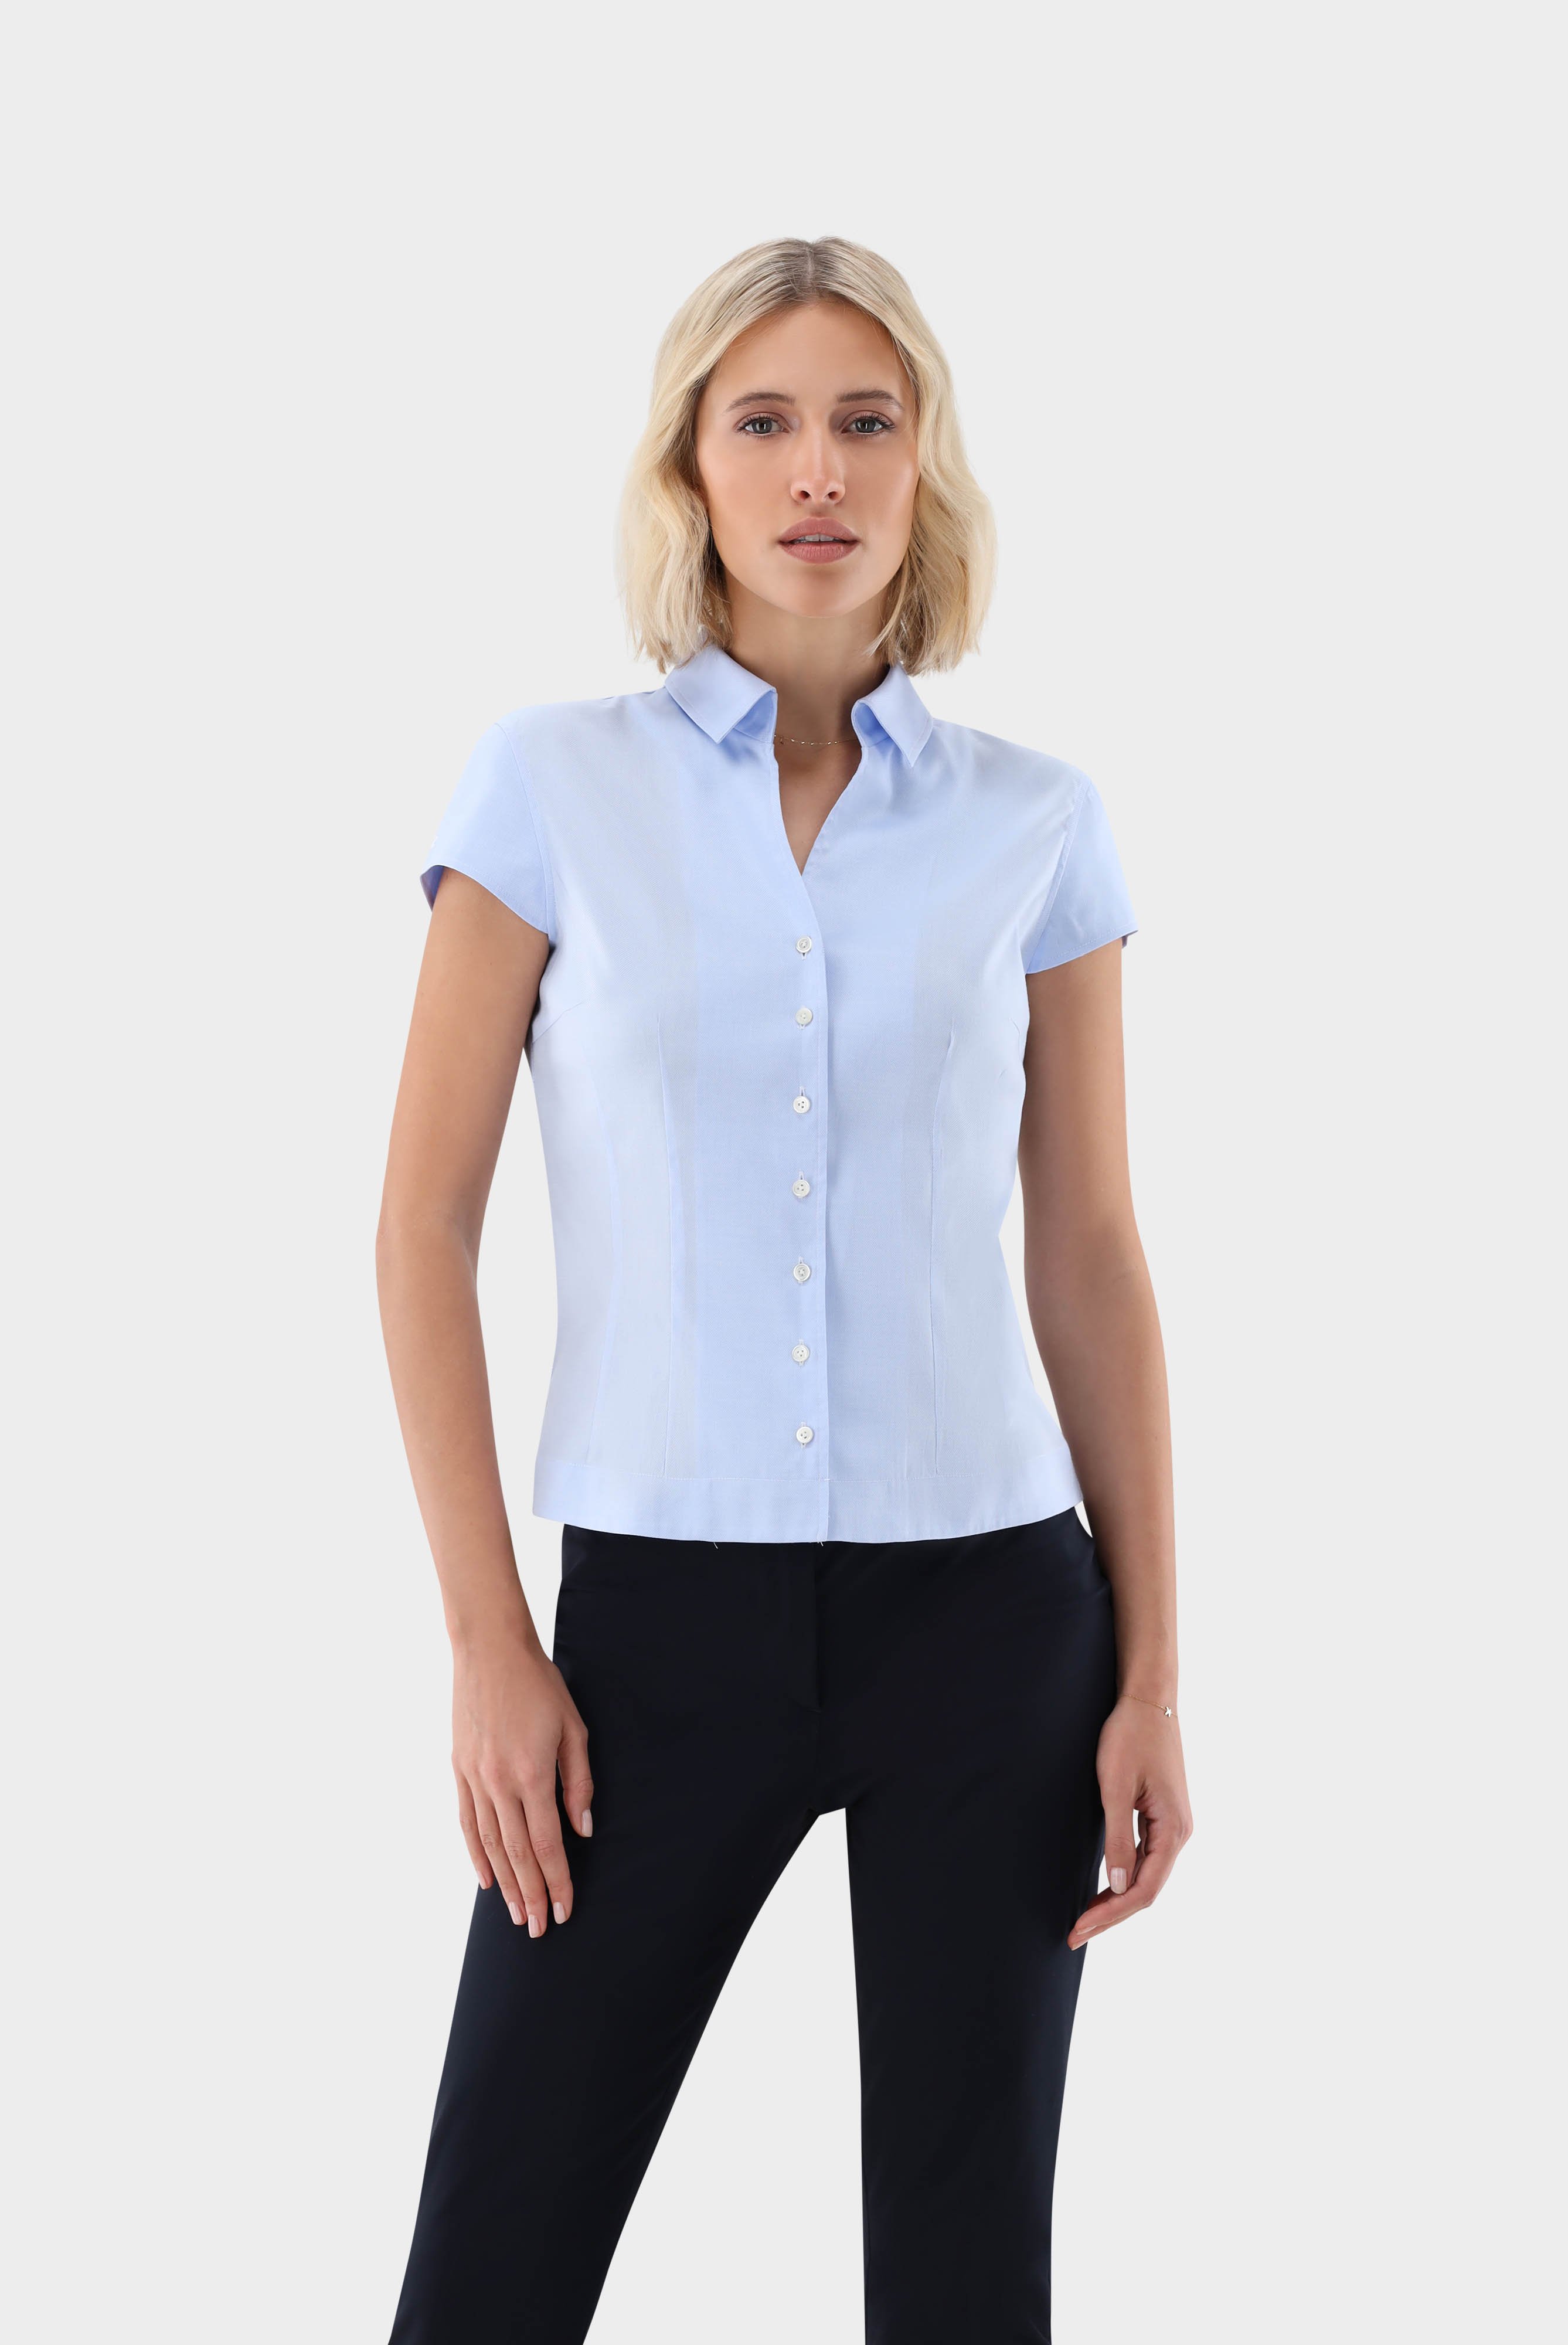 Business Blouses+Natté Short Sleeve Shirt Blouse+05.5029.73.130532.720.36